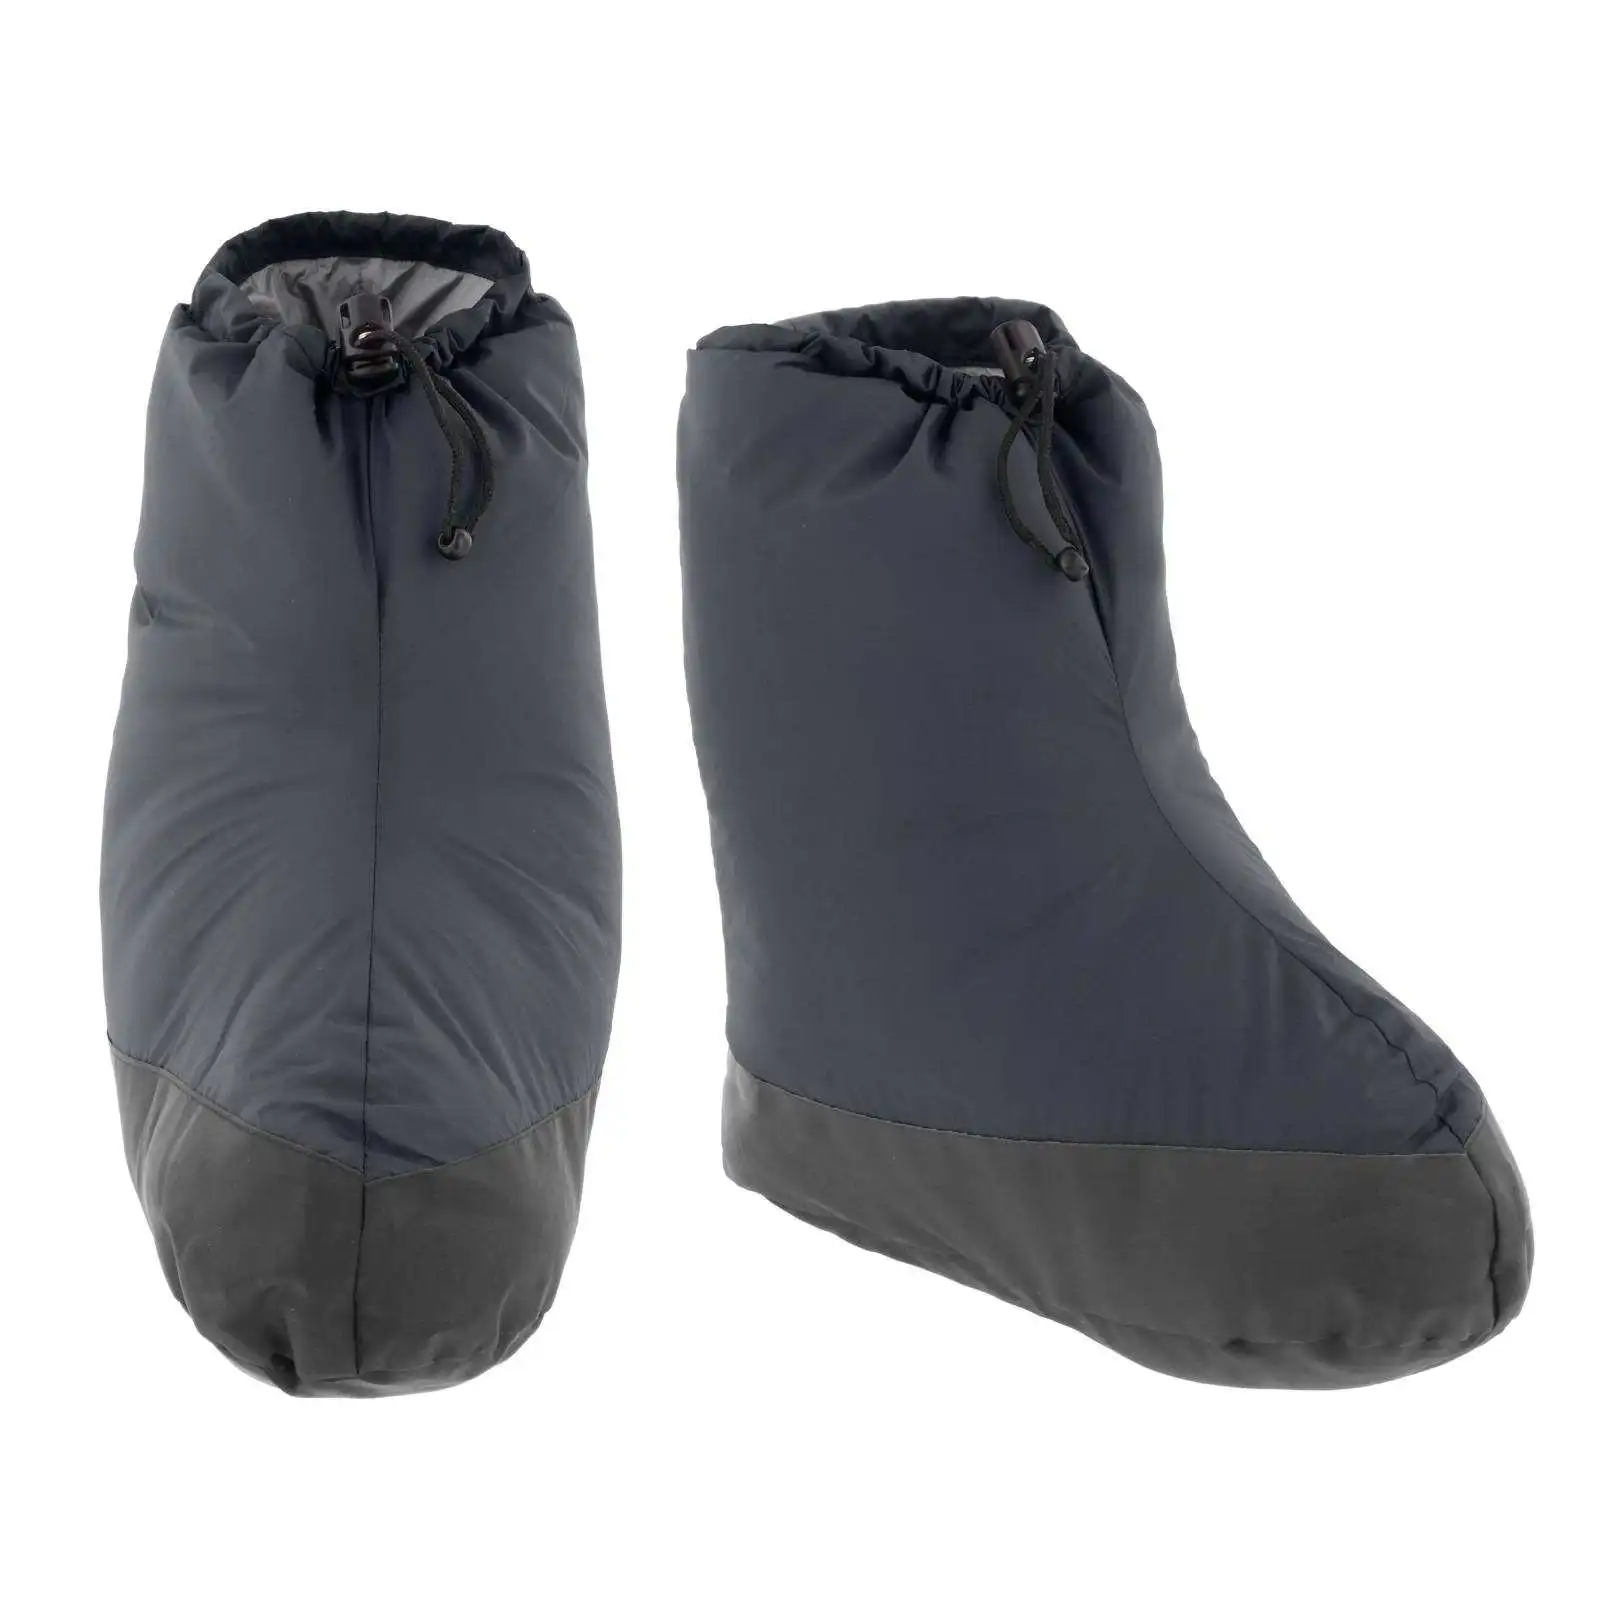 Duck Down Booties Sleeping Bag Accessories Duck Down Slippers Ultralight Camping Outdoor Soft Sock Unisex Indoor Warm Boots